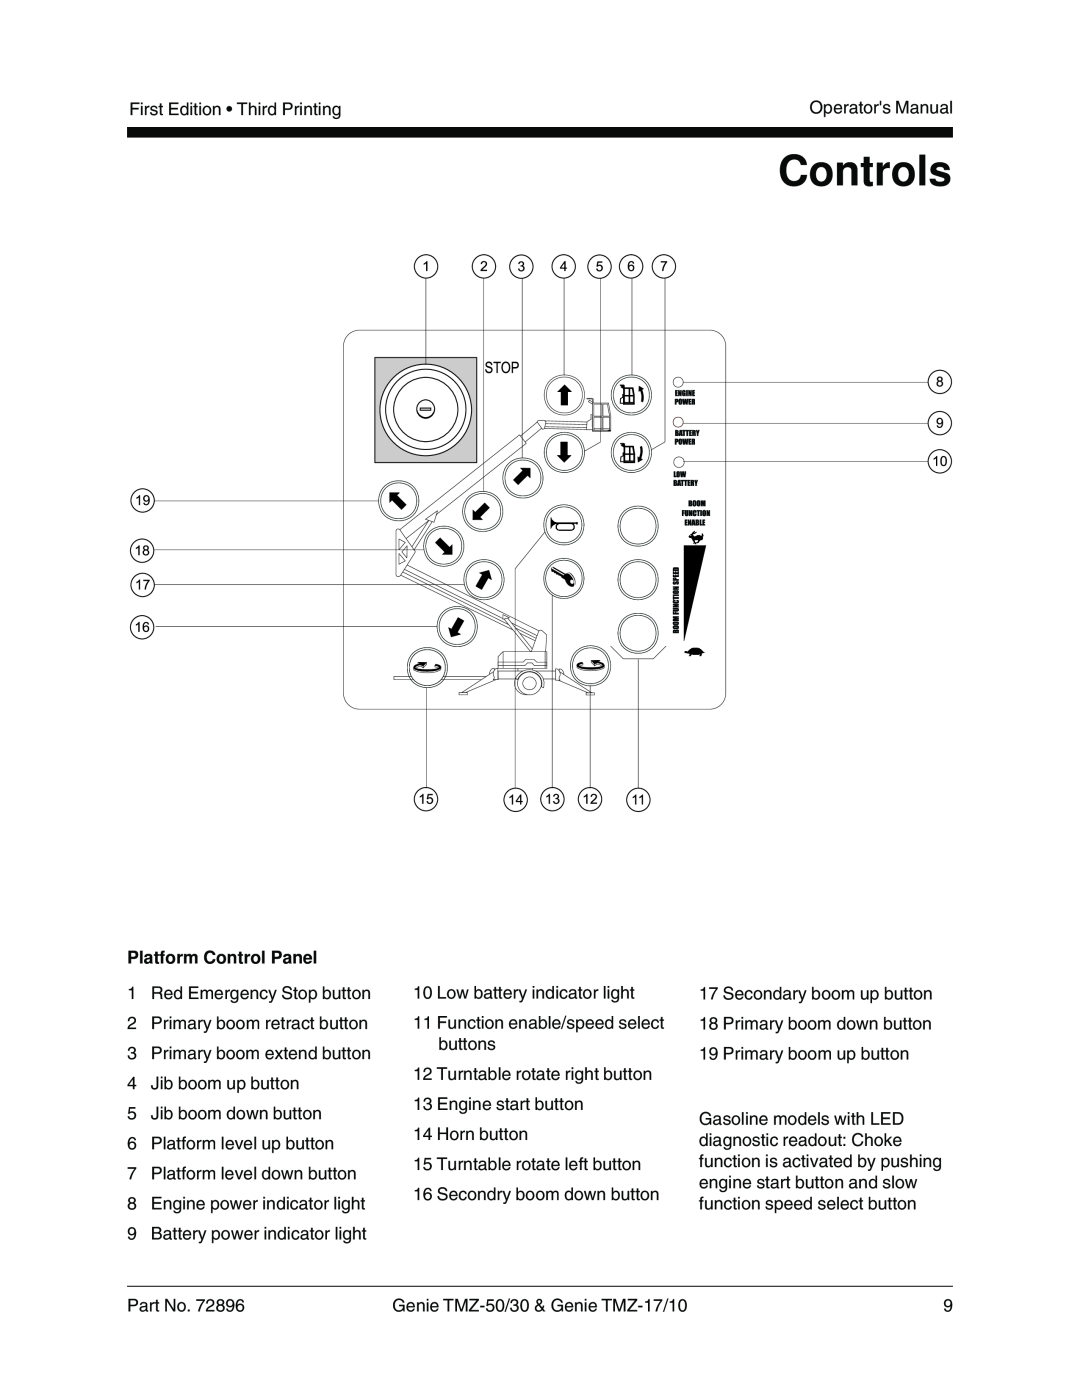 Genie TMZ-17, TMZ-10, TMZ-50, TMZ-30 manual Controls, Platform Control Panel 